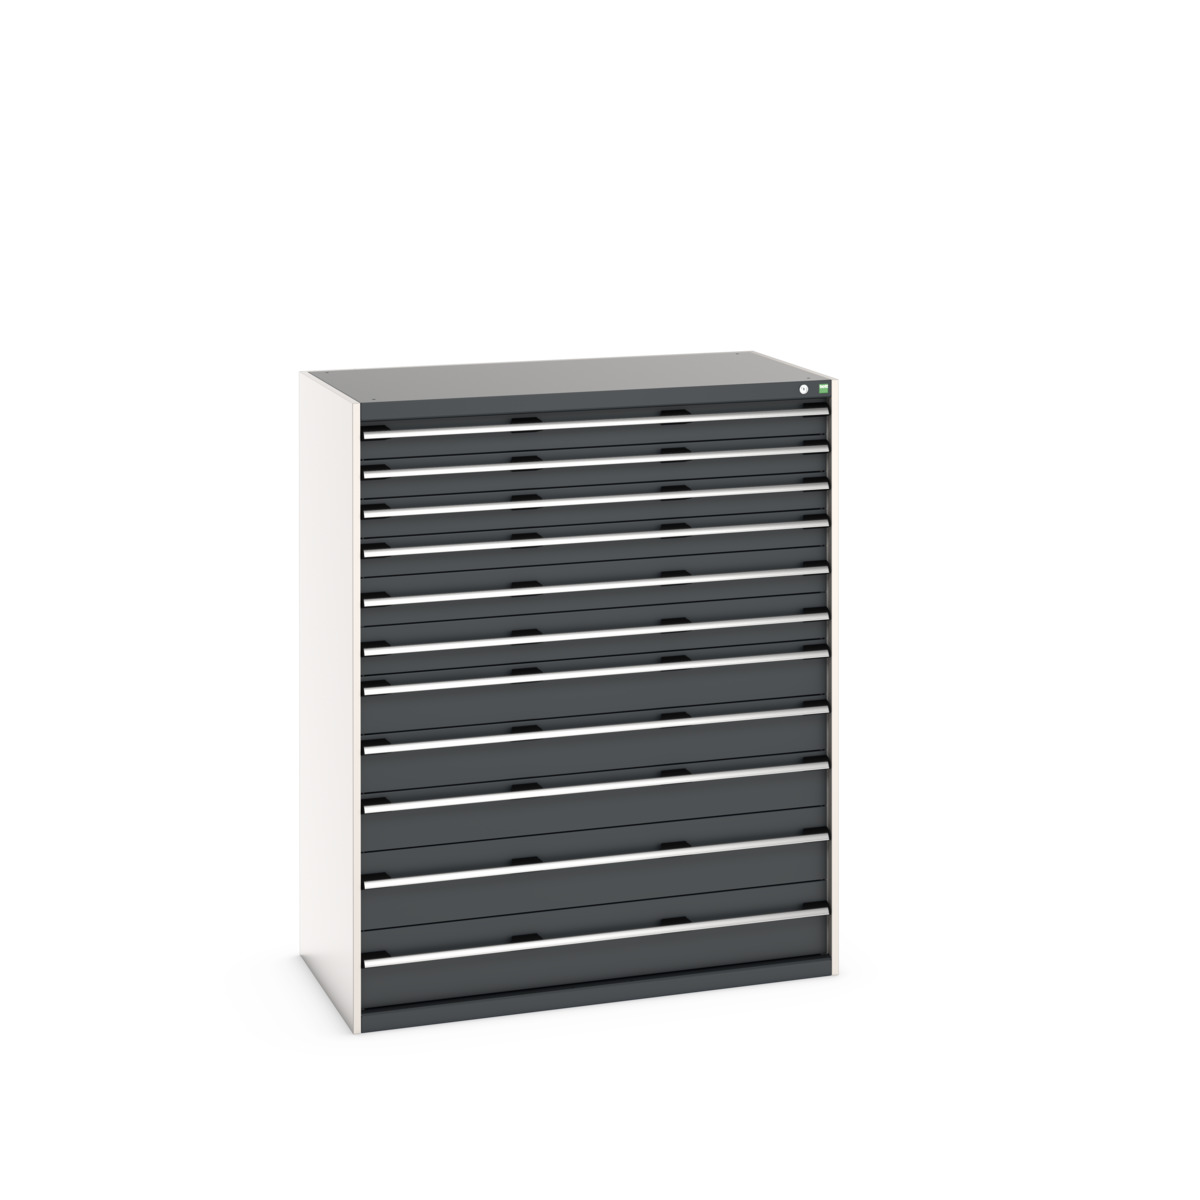 40030030. - cubio drawer cabinet